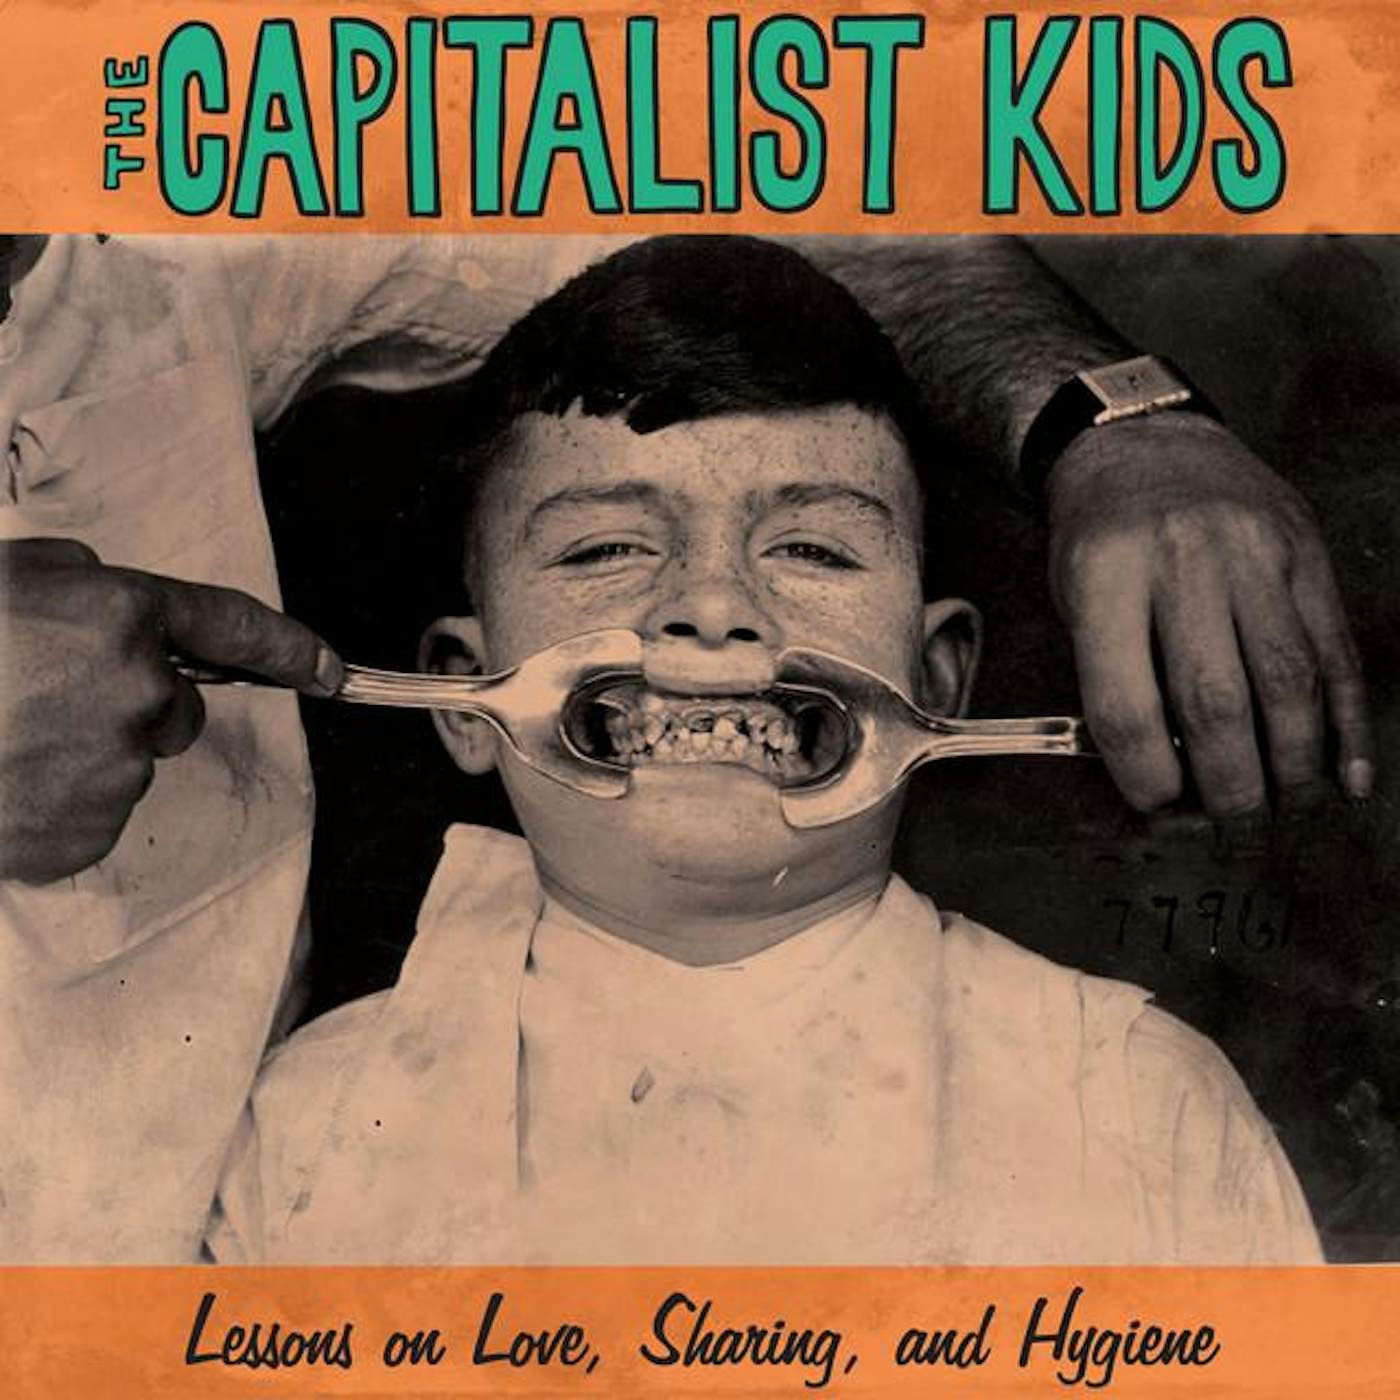 The Capitalist Kids